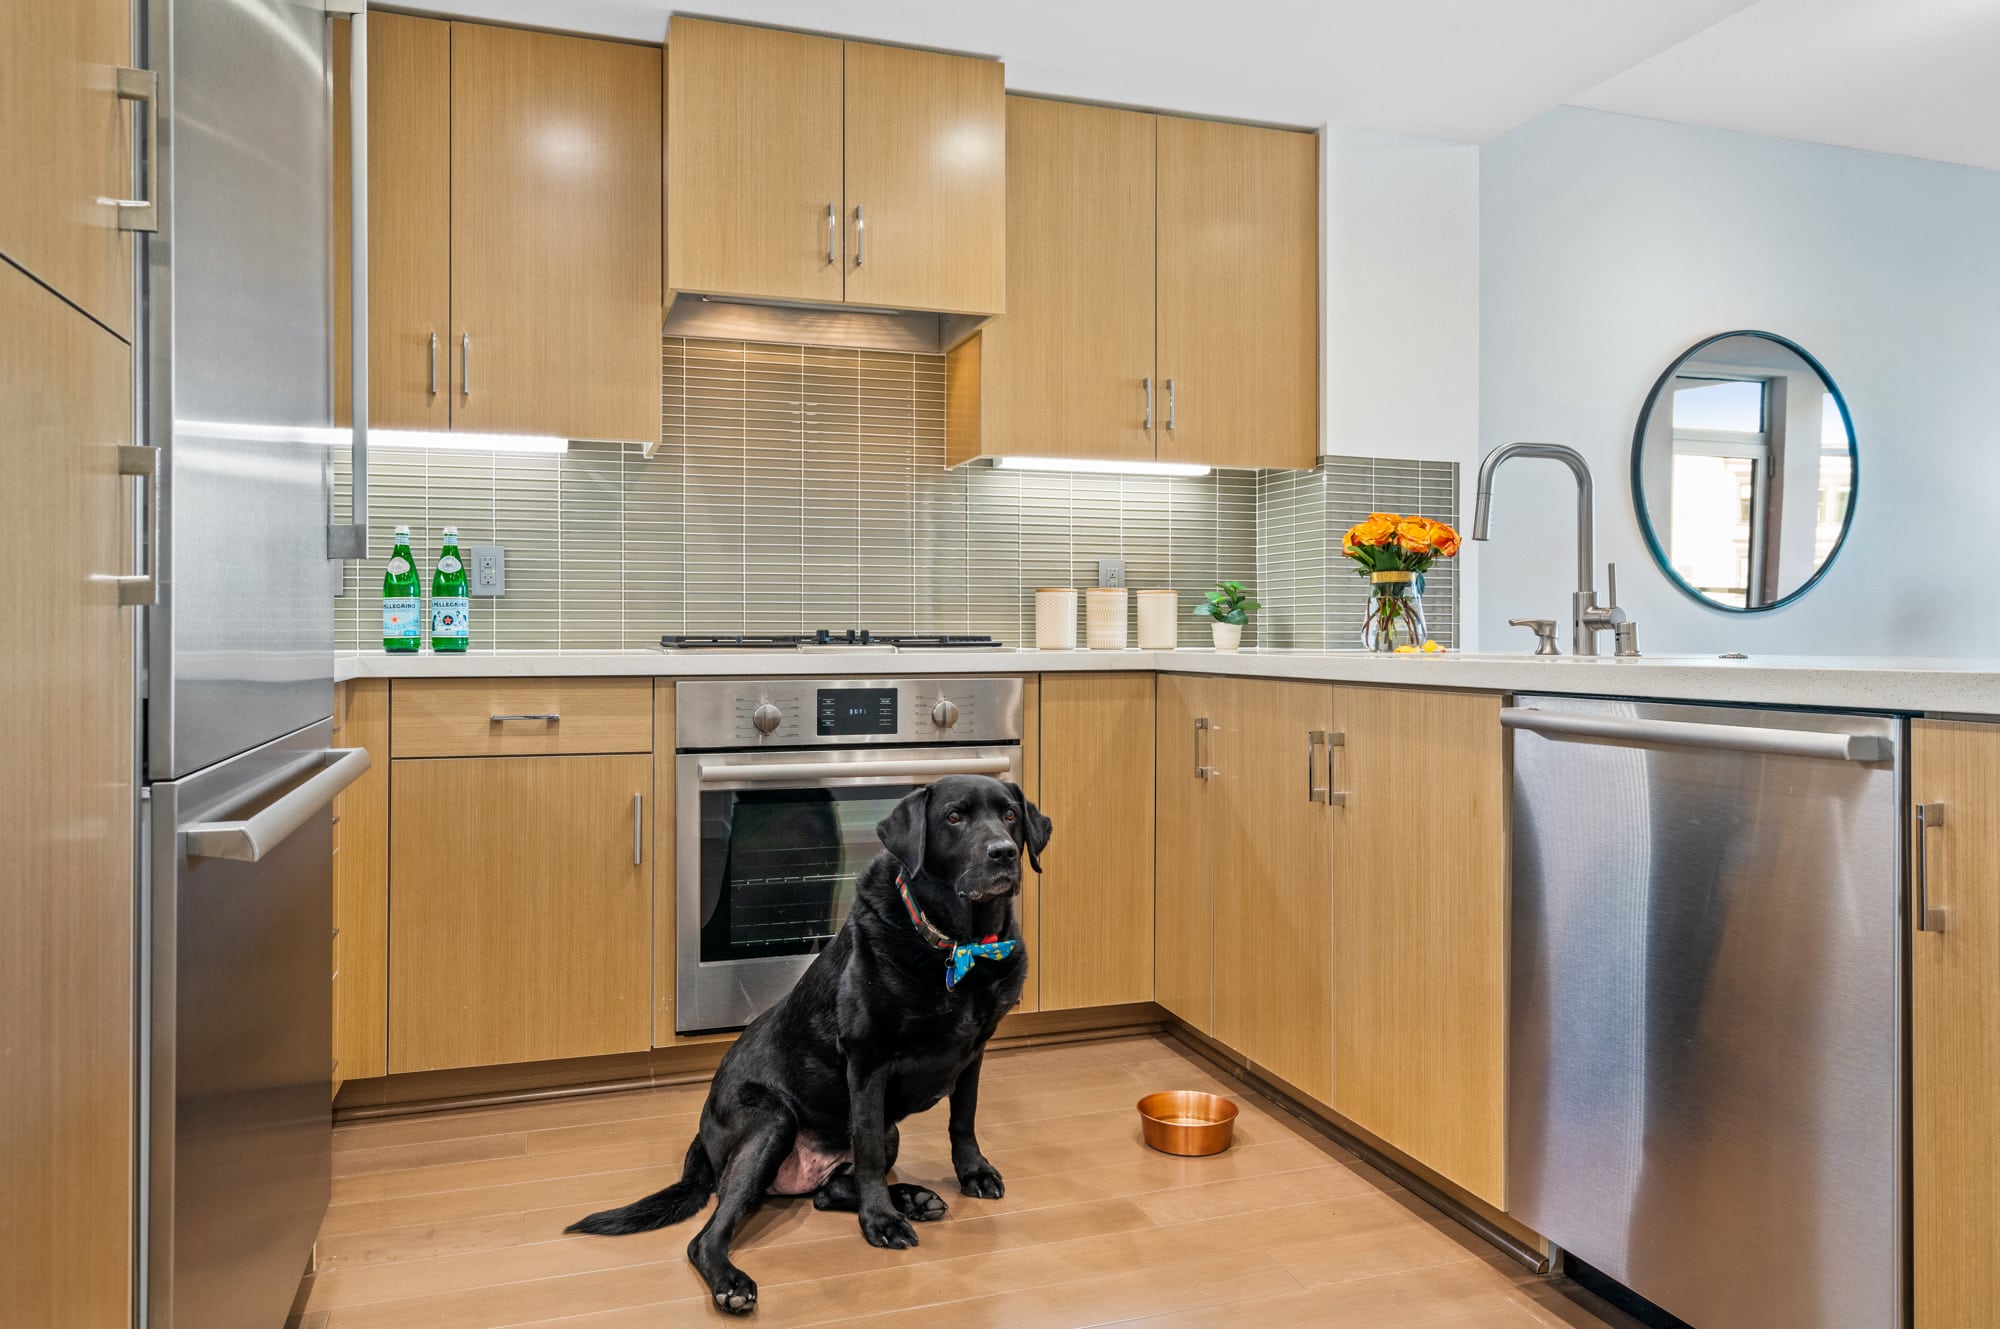 Mr Raffi, the Black Labrador Retriever, in the Kitchen